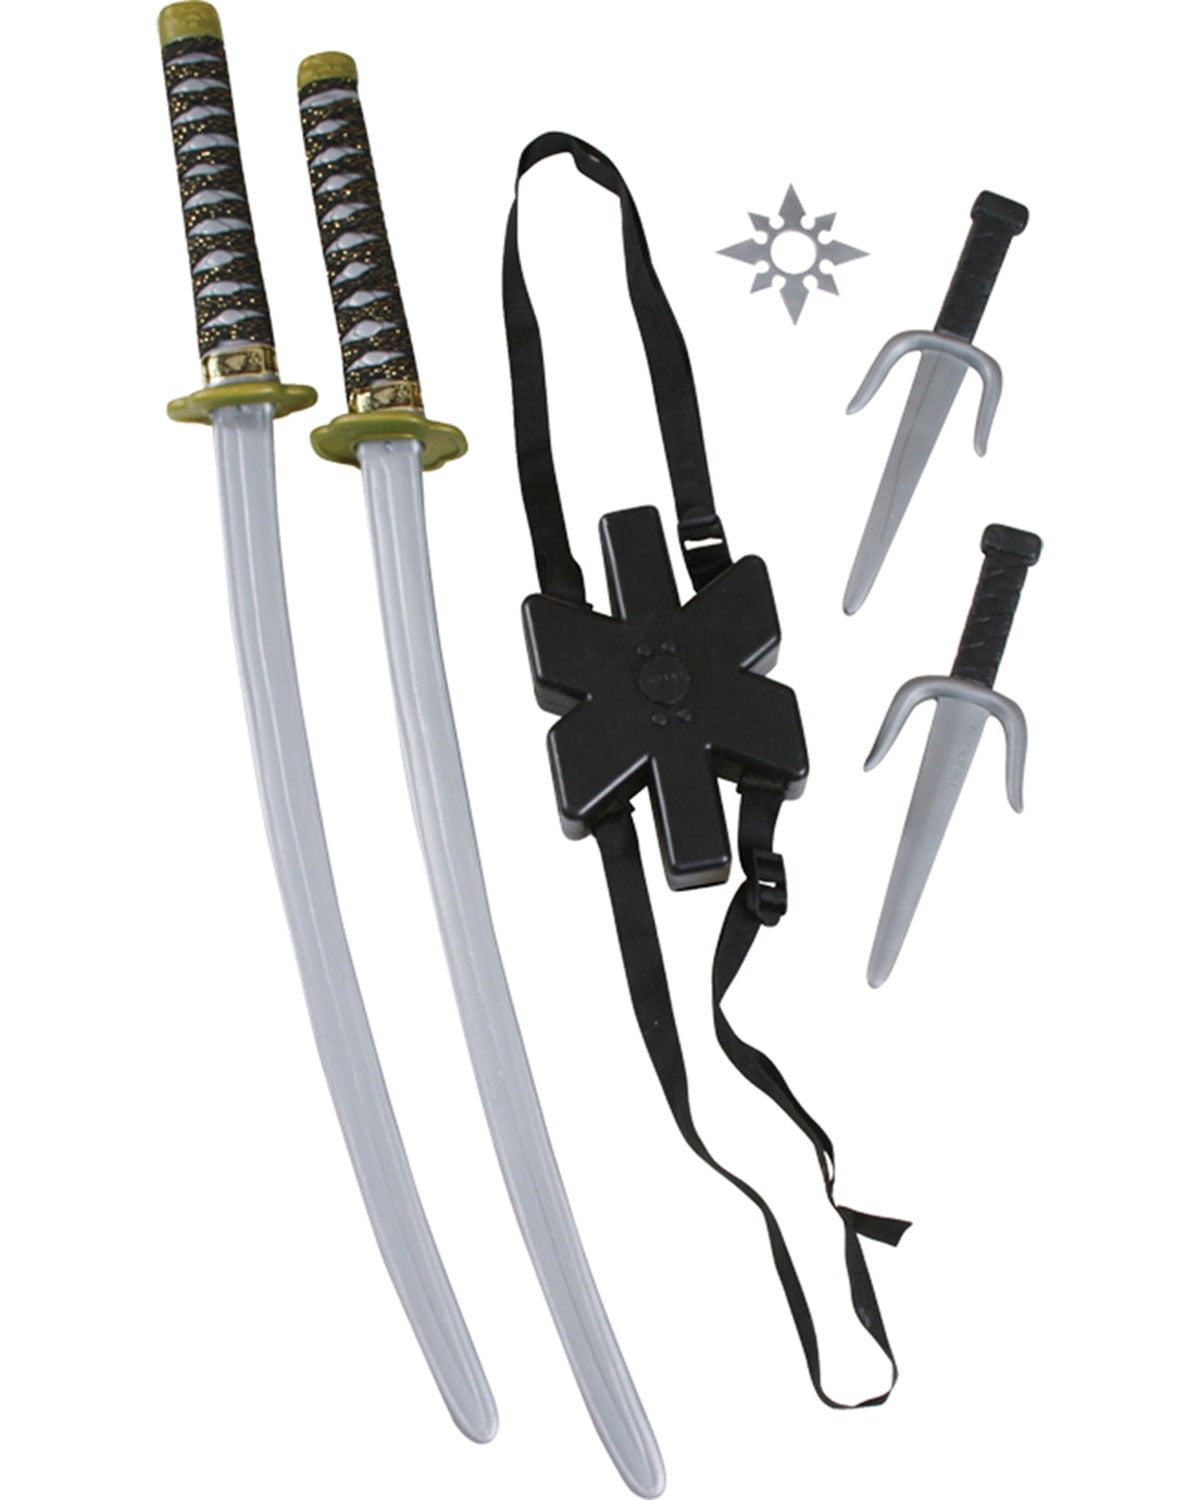 4 COLORED plastic NINJA SWORDS play boys toy sword new ninga novelty item 